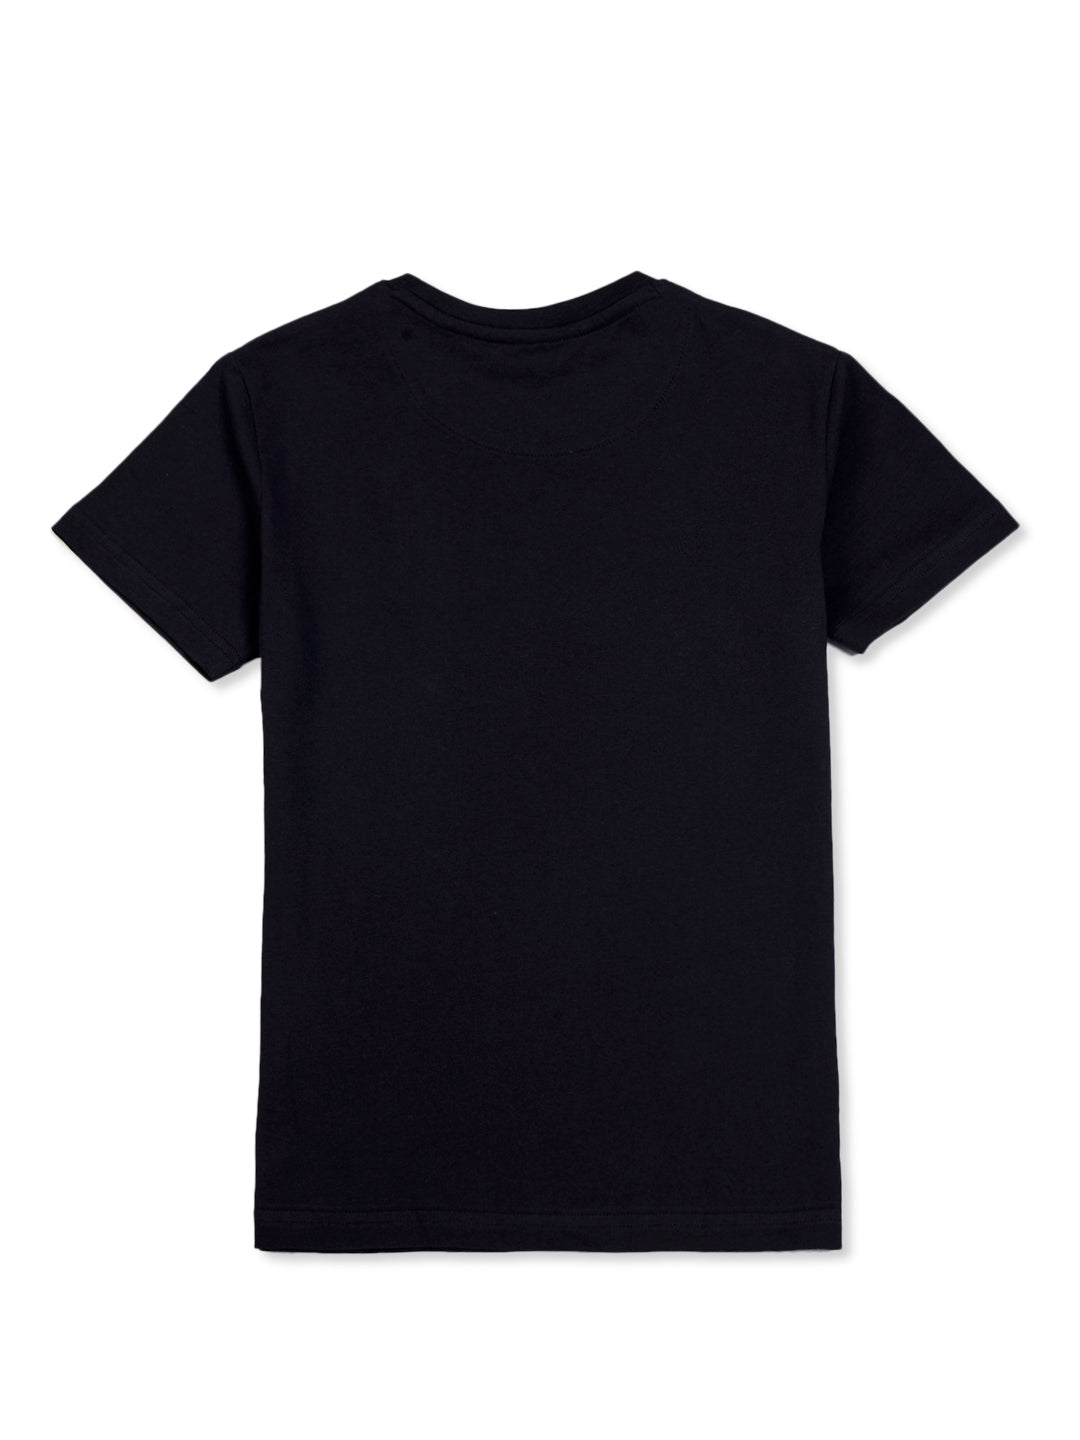 Boys Black Cotton Solid Half Sleeves T-Shirt